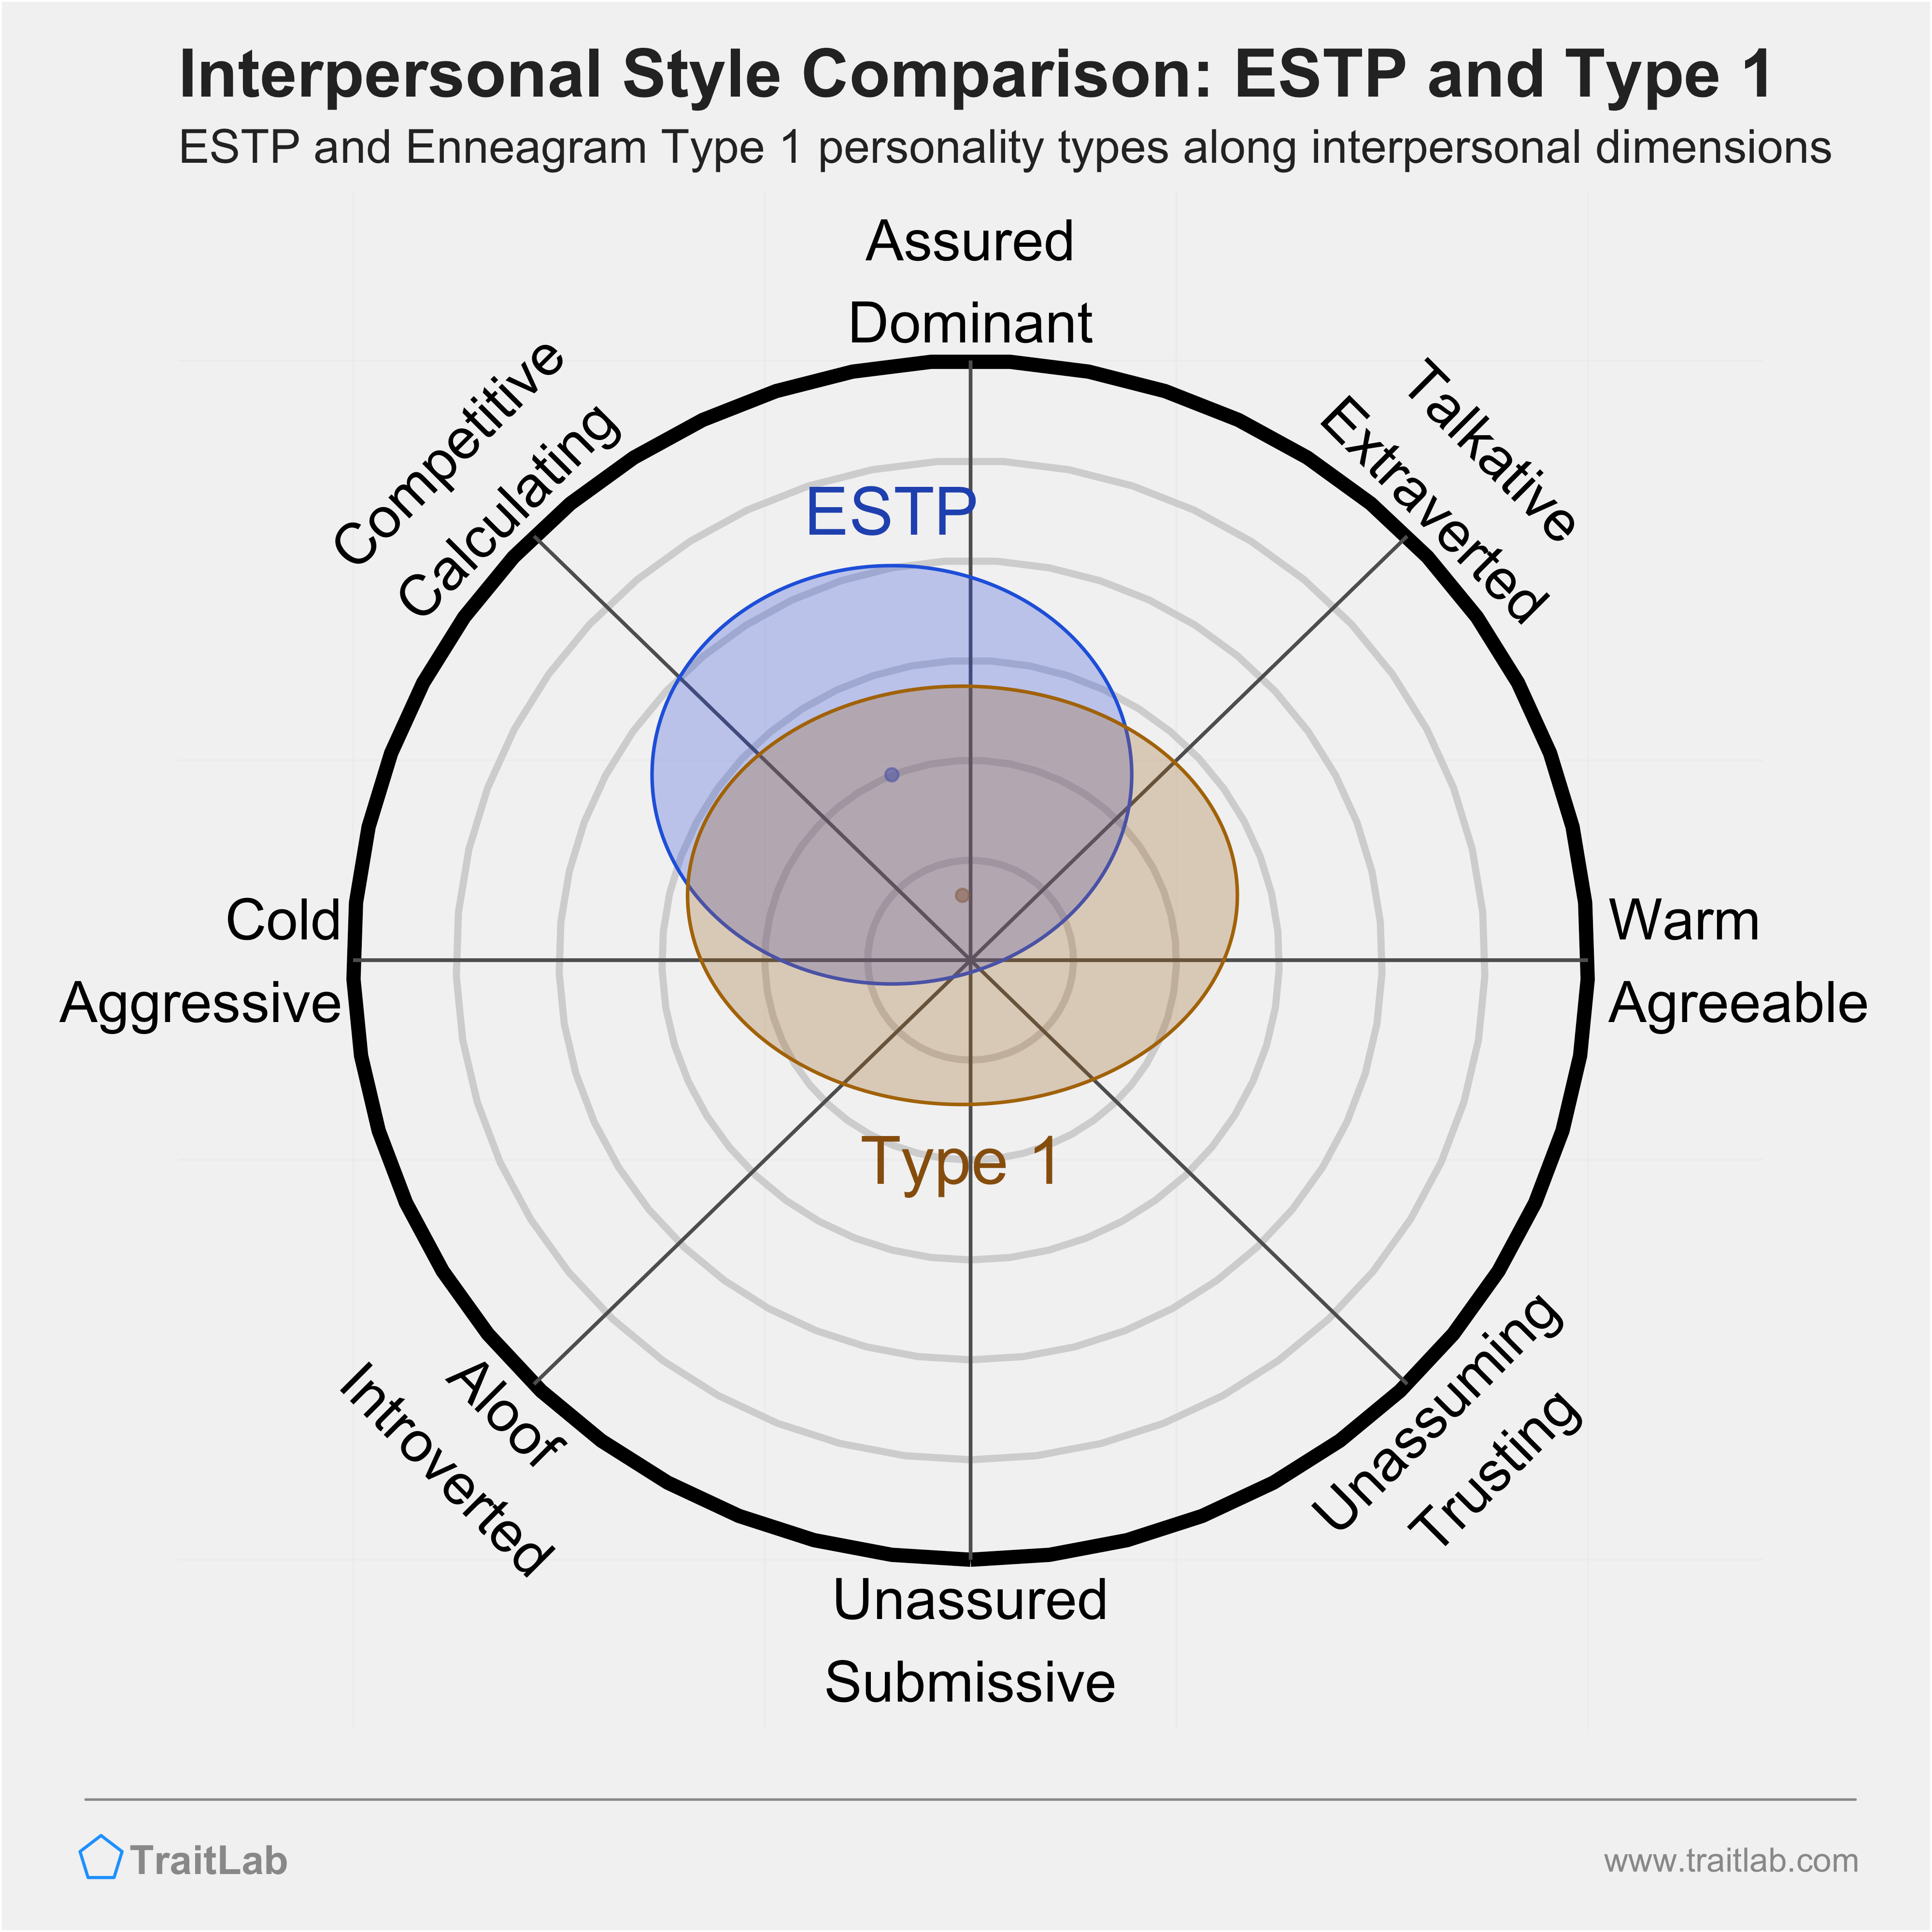 Enneagram ESTP and Type 1 comparison across interpersonal dimensions